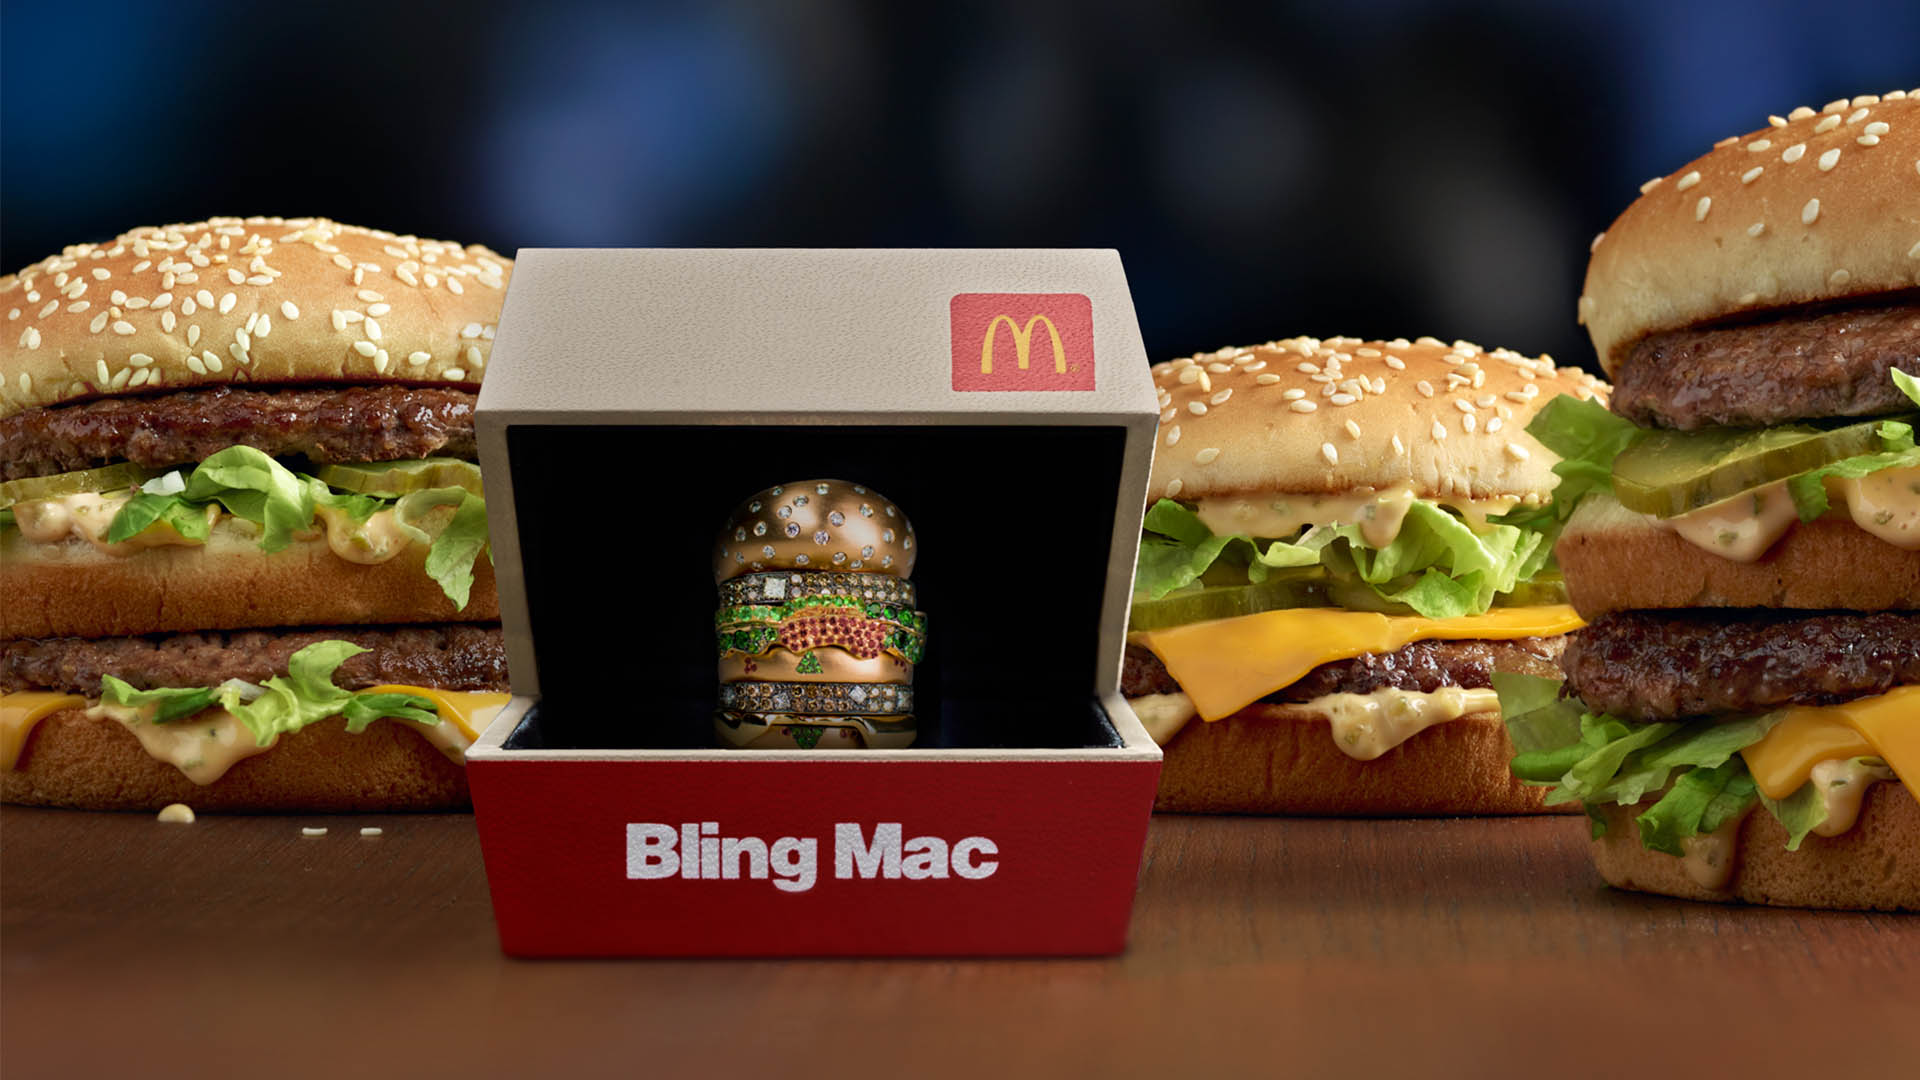 McDonald's offering diamond ring 'Bling Mac' ring - TODAY.com